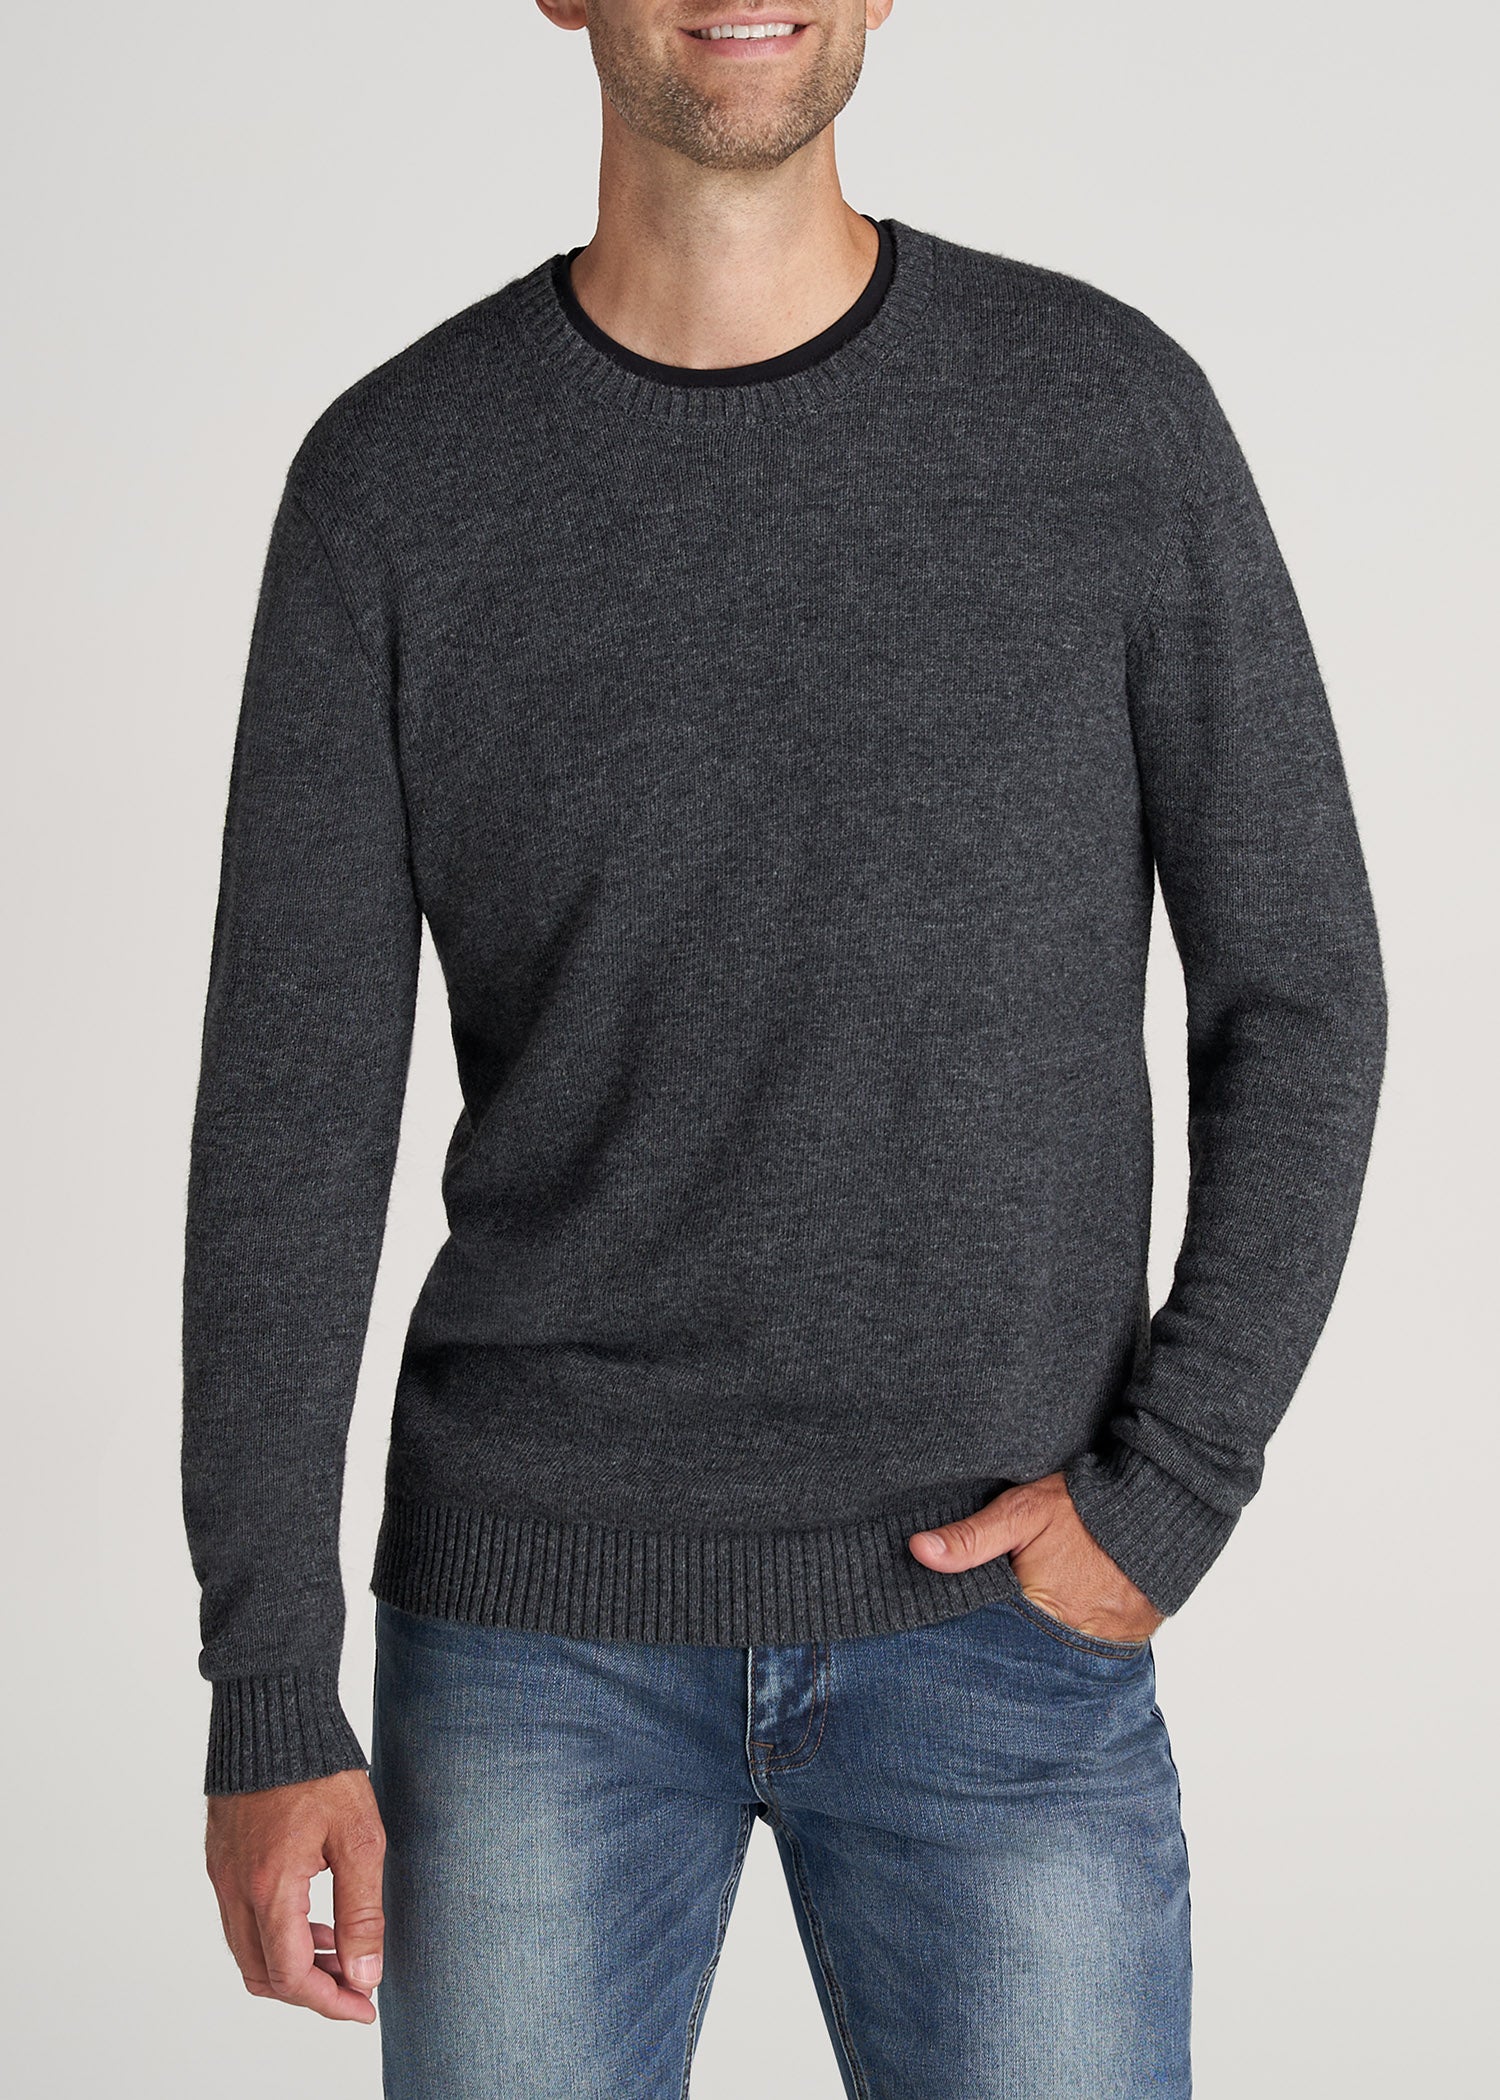 American-Tall-Men-LJ-Wool-Sweater-CharcoalMix-front